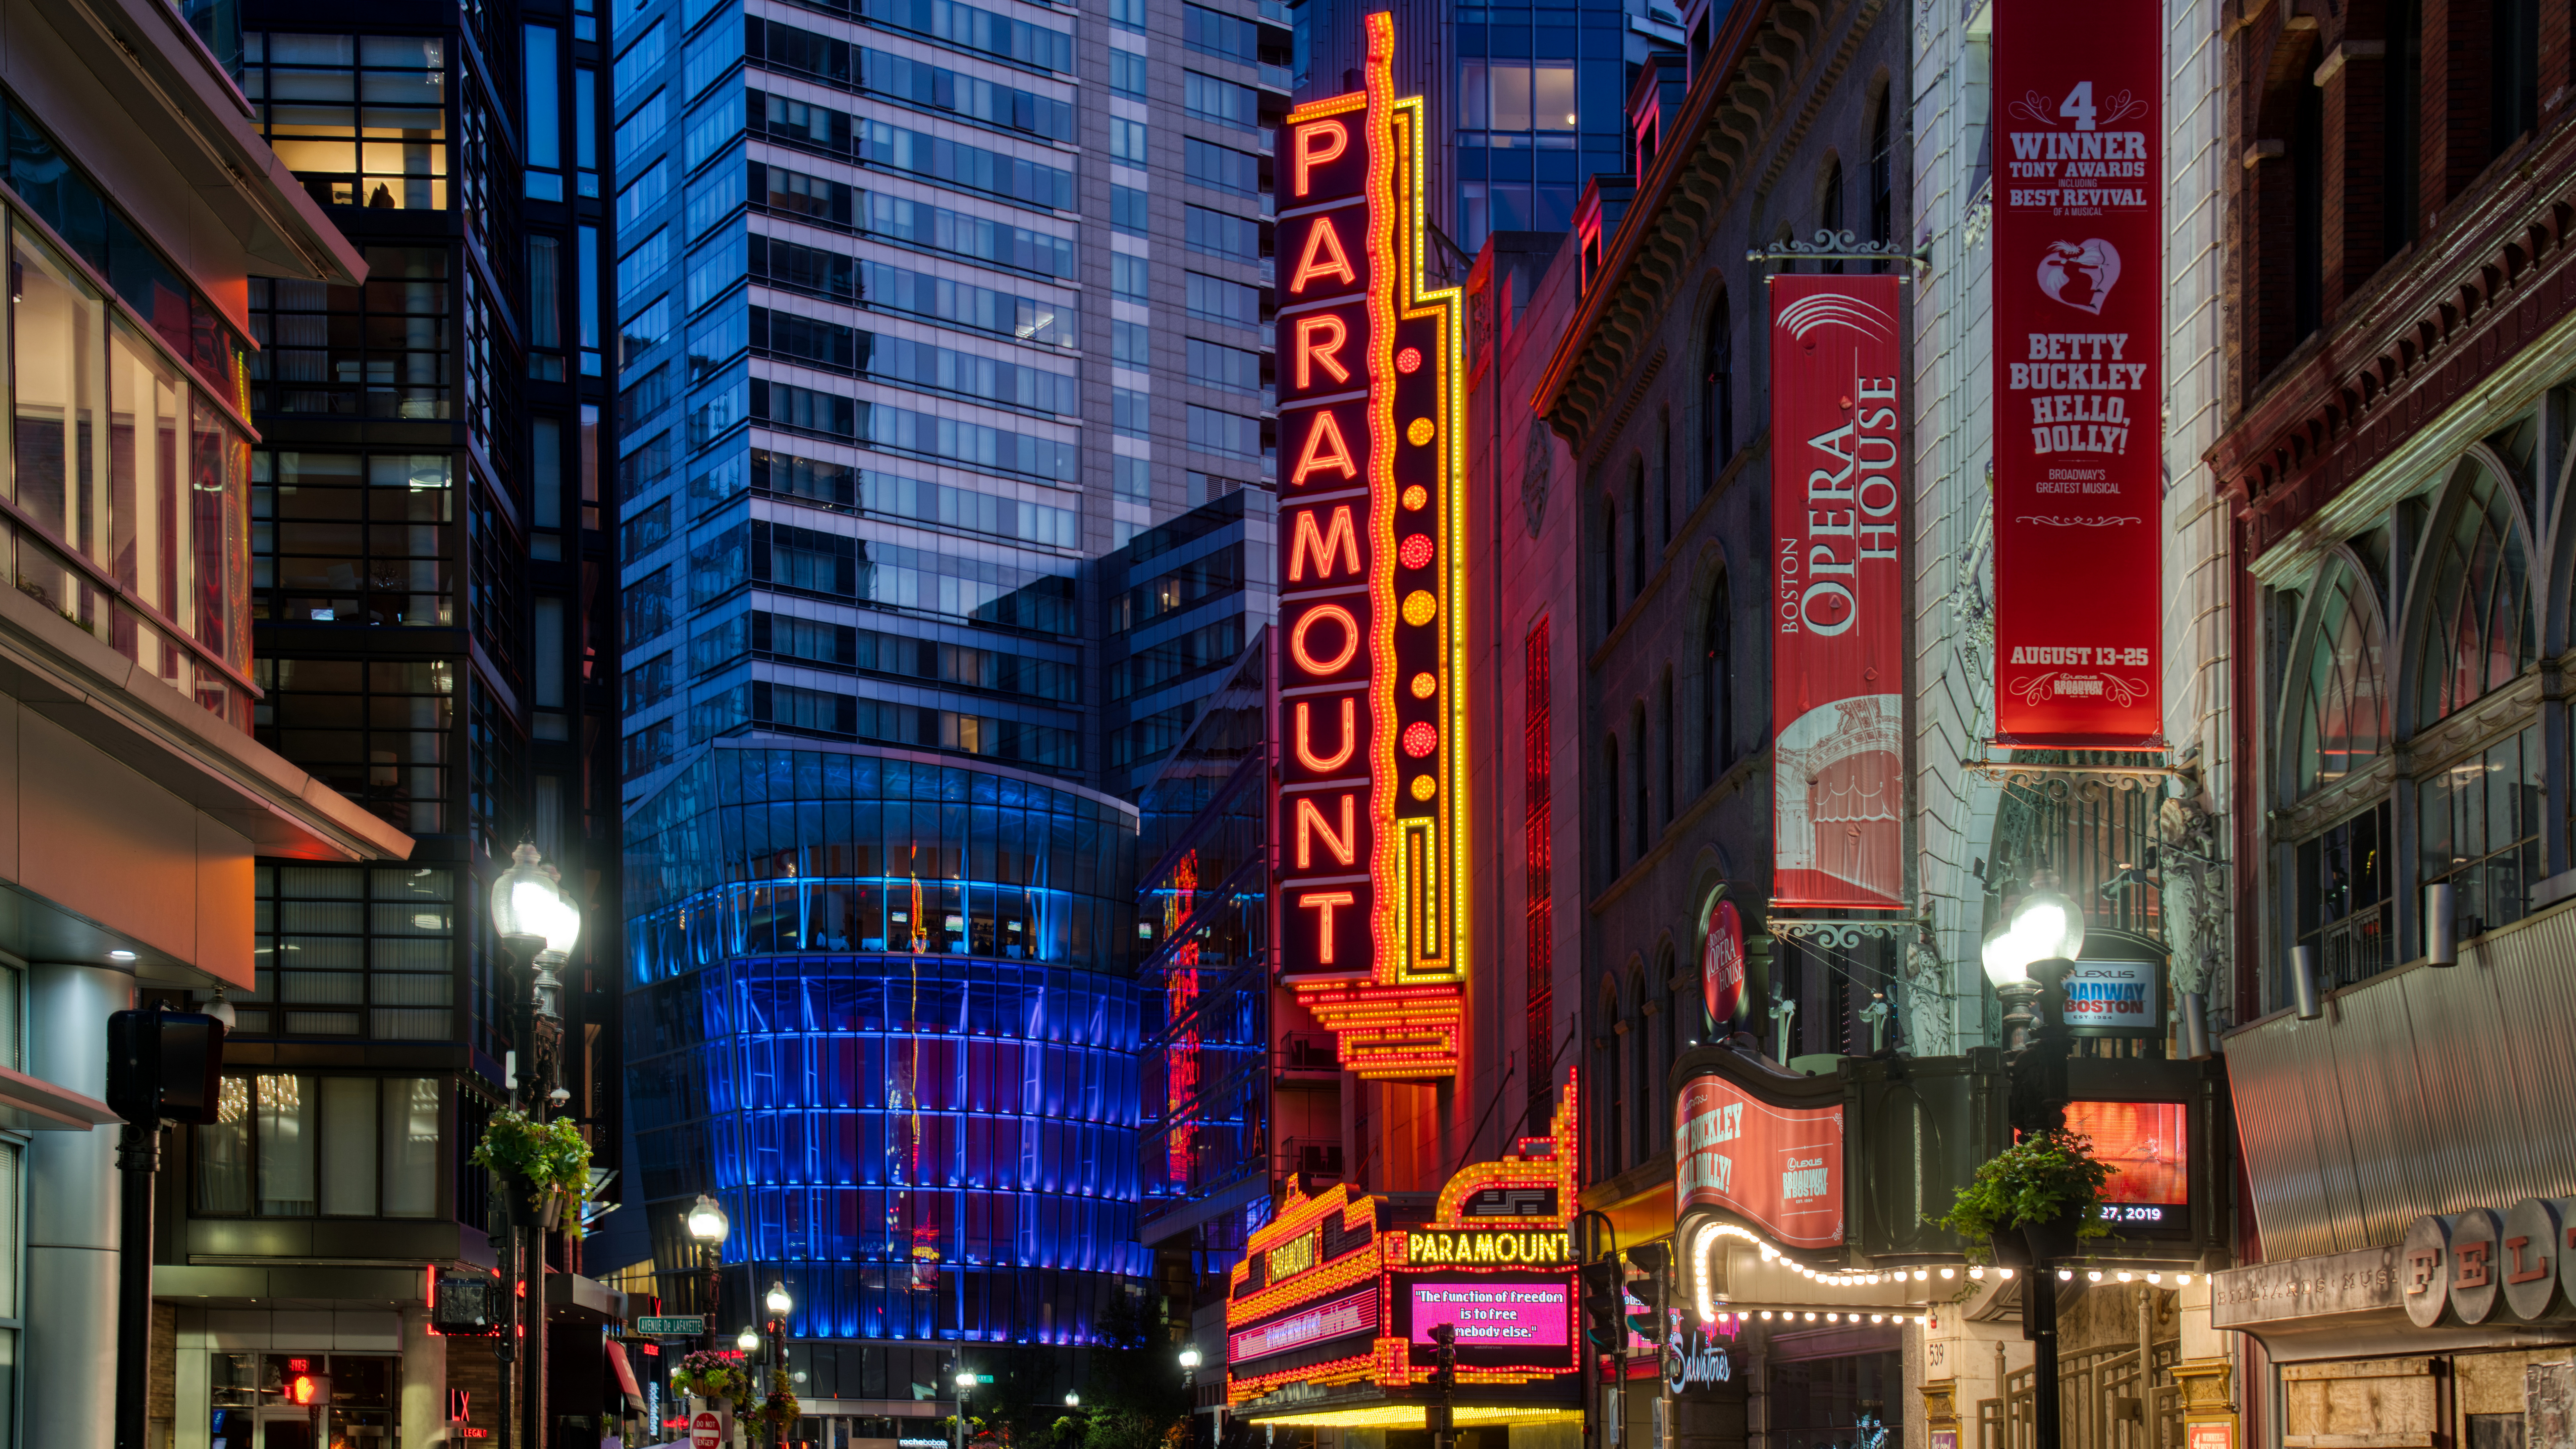 Photography Trey Ratcliff Cityscape Night Lights Building Theater Massachusetts USA Boston 7680x4320